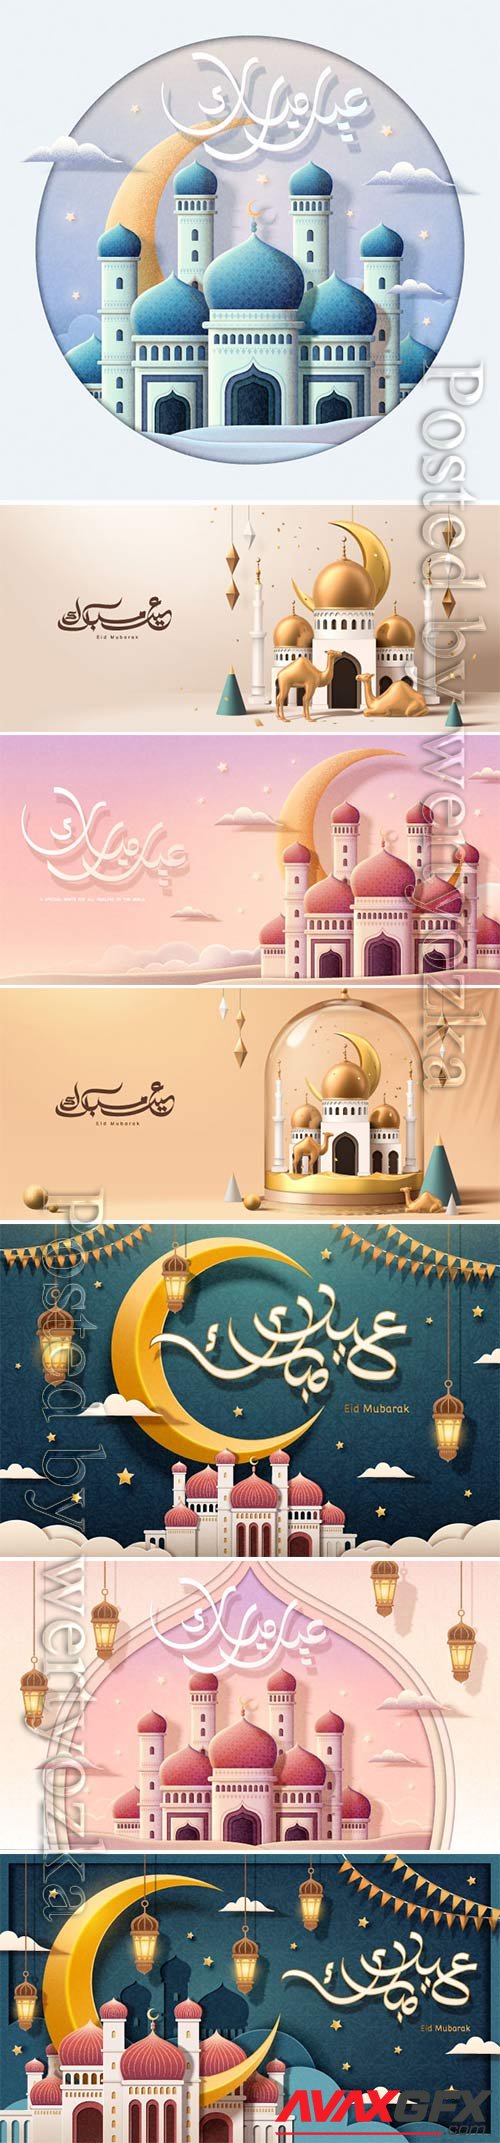 Eid mubarak calligraphy vector banner